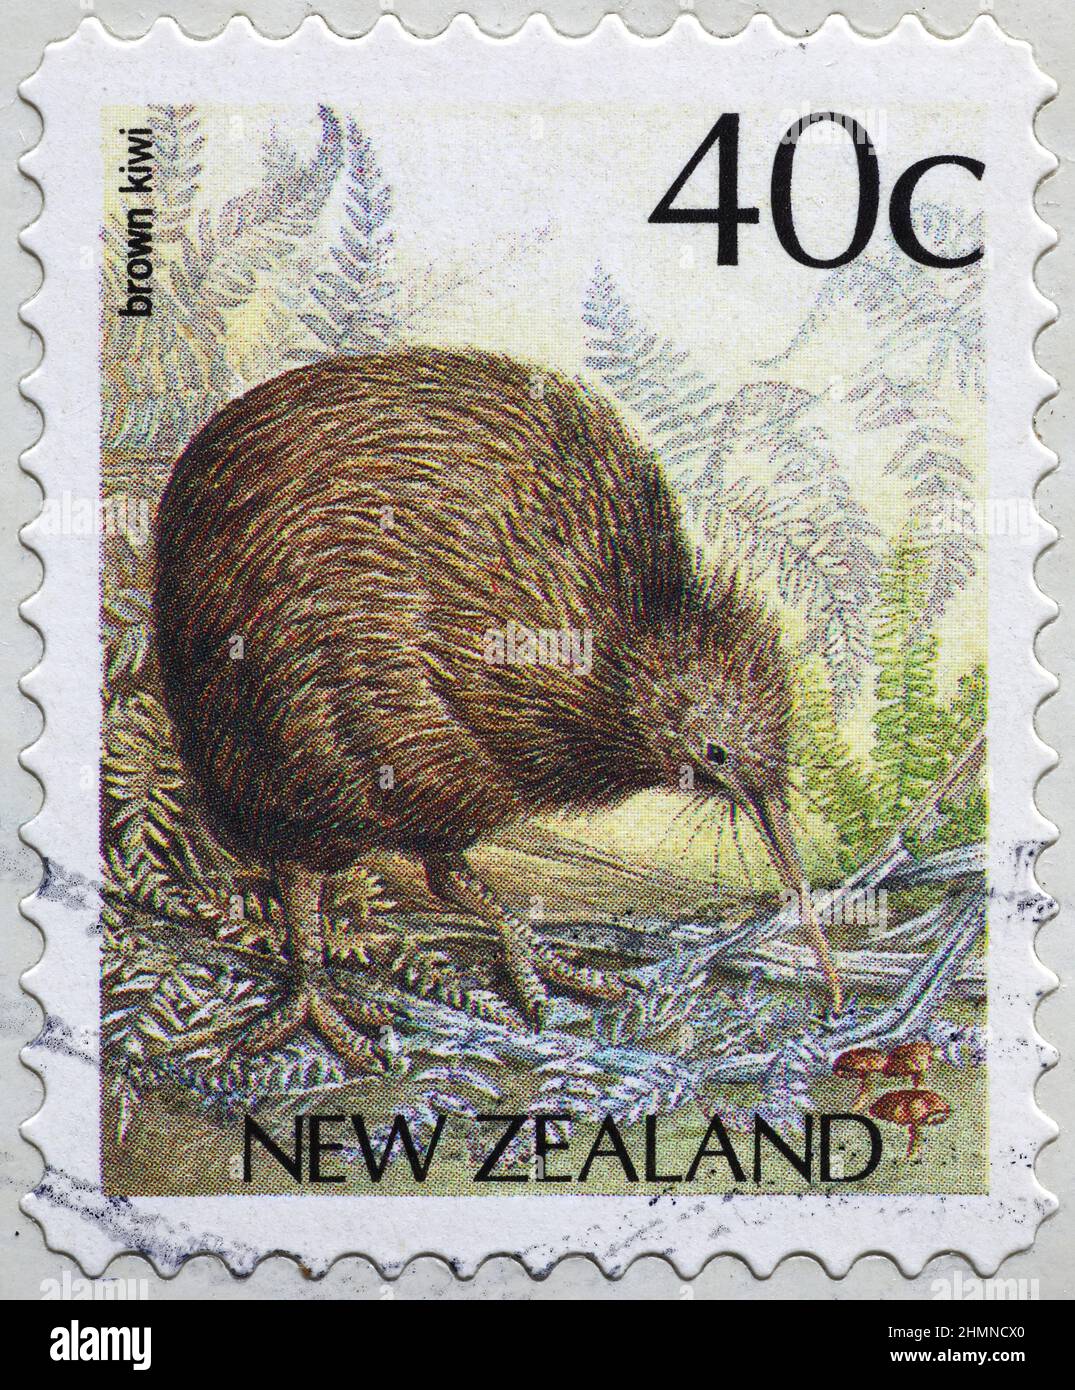 Brown kiwi, endemic bird of New Zealand on stamp Stock Photo